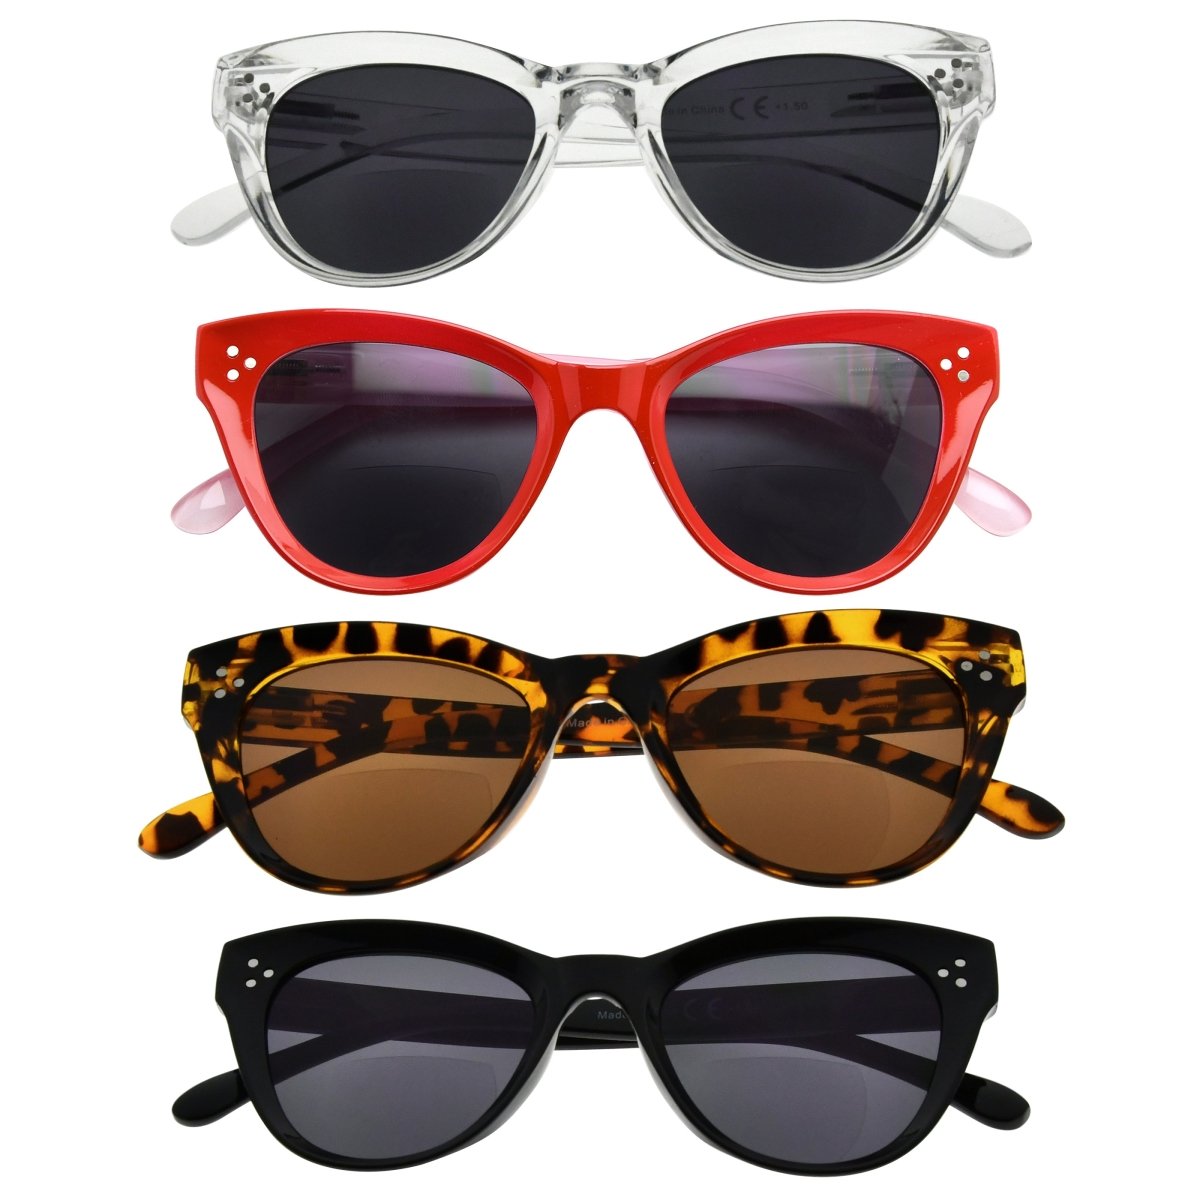 4 Pack Cat-eye Design Bifocal Sunglasses for Women SBR9108eyekeeper.com